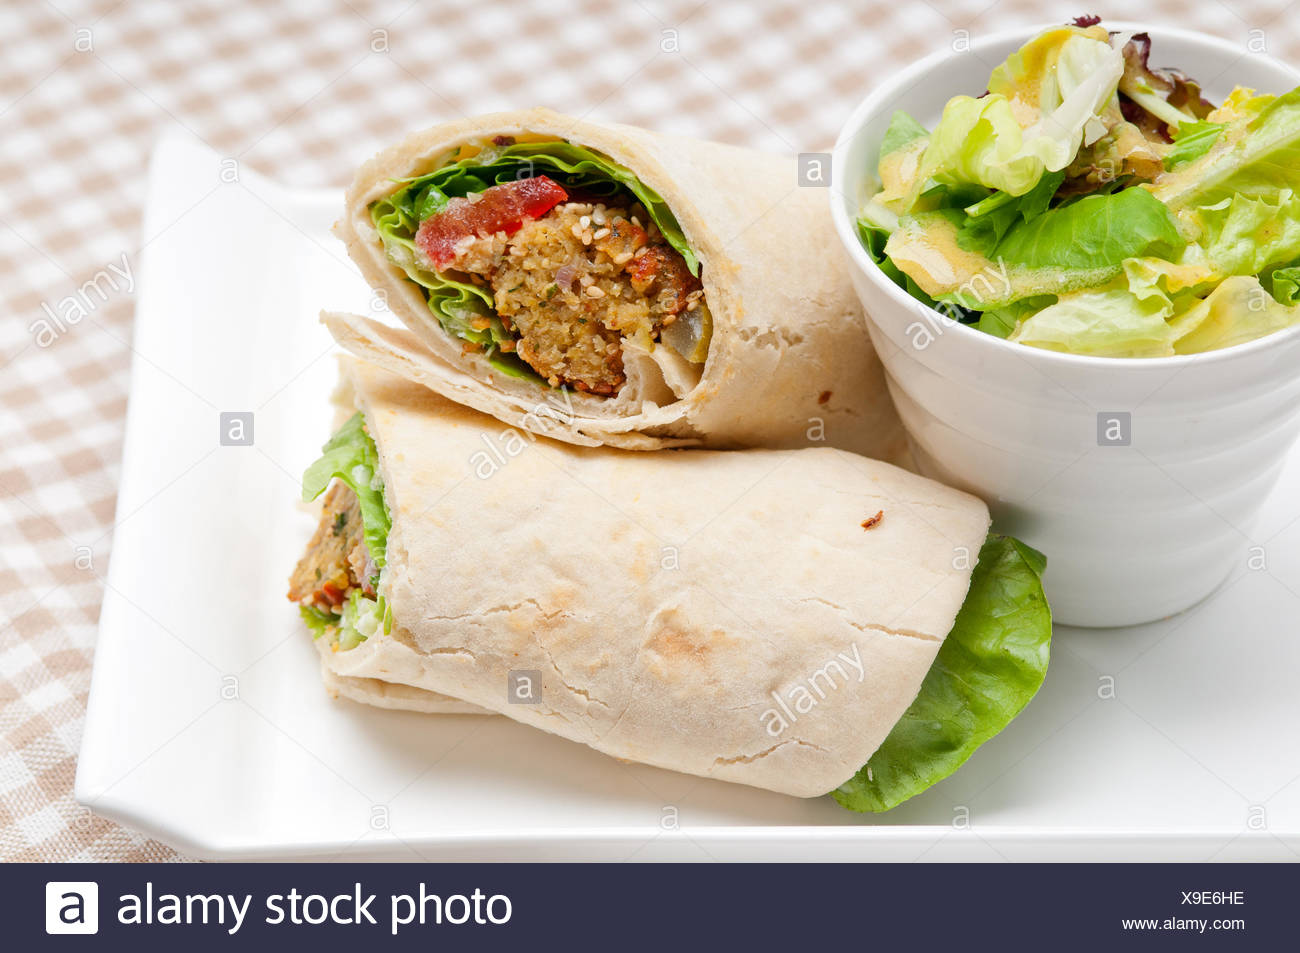 falafel pita bread roll wrap sandwich Stock Photo: 281210314 - Alamy